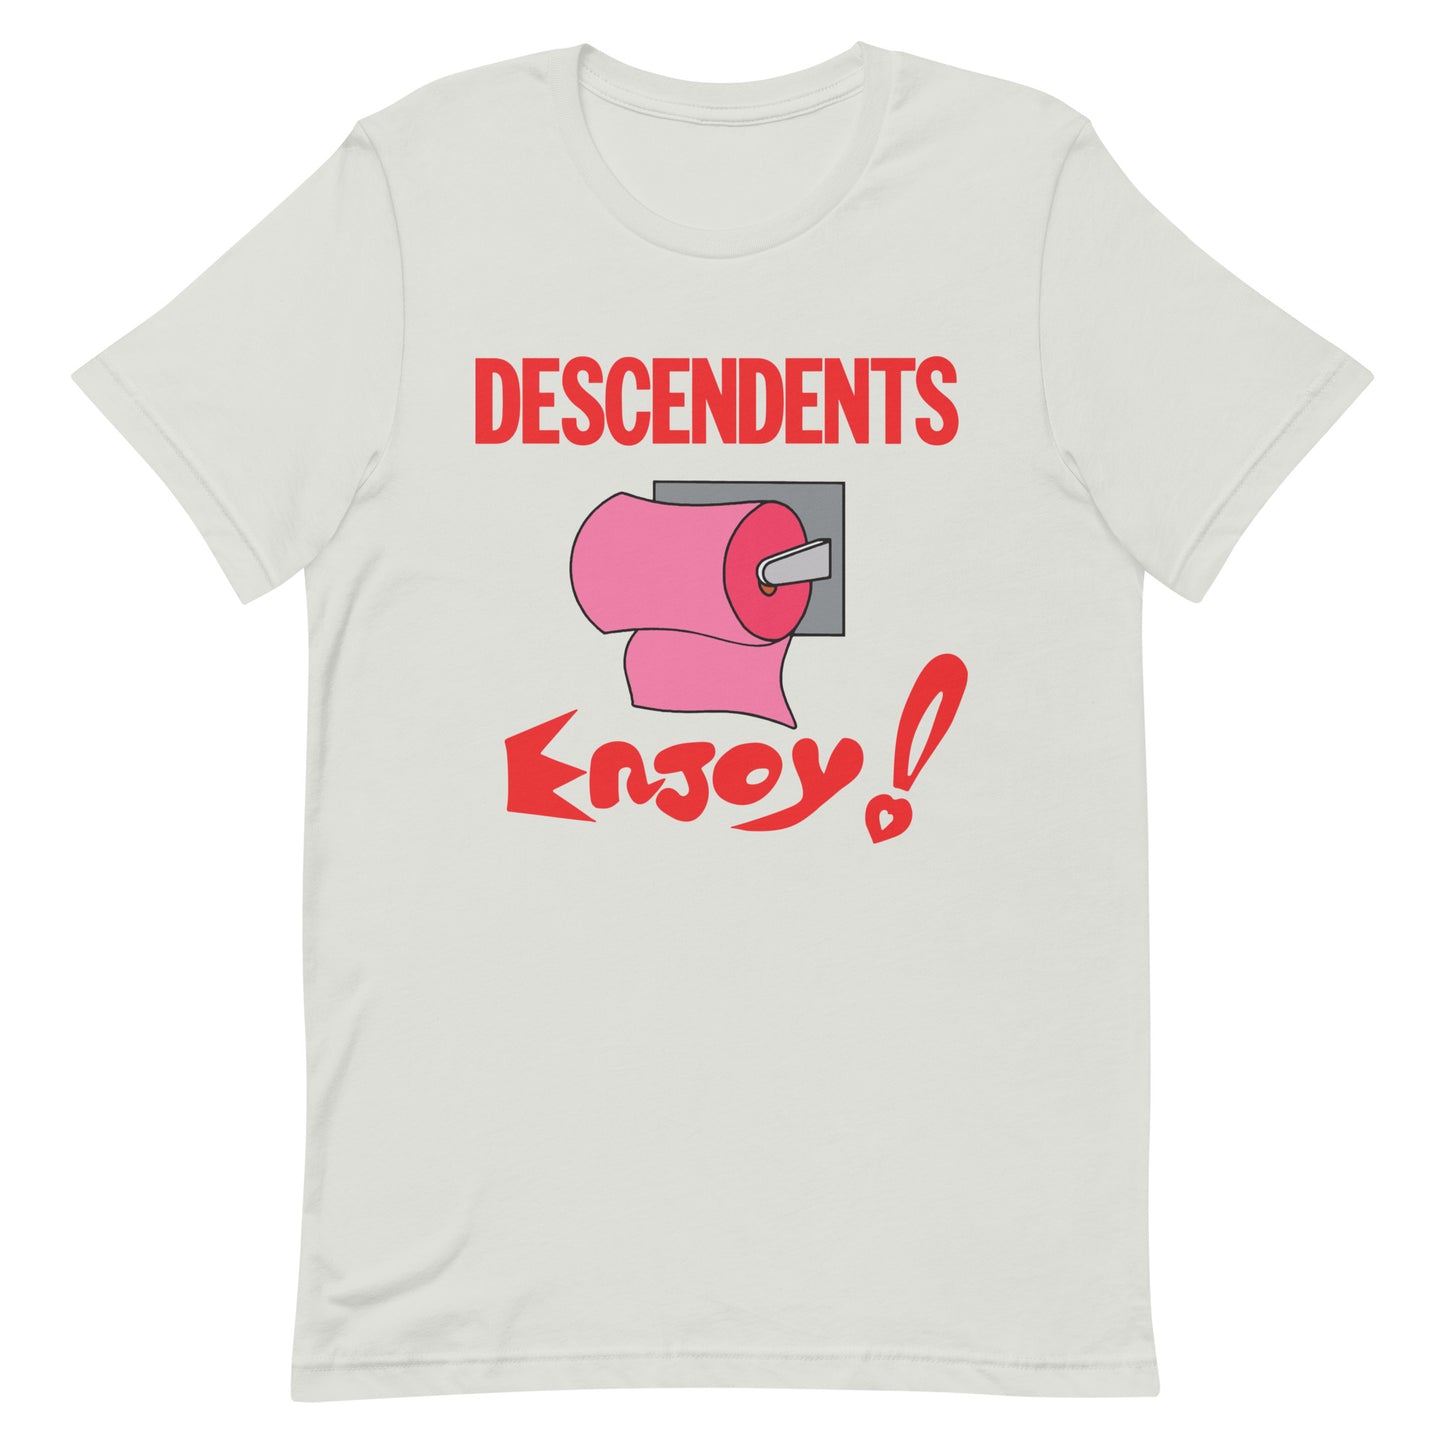 Descendent - Enjoy! T-Shirt